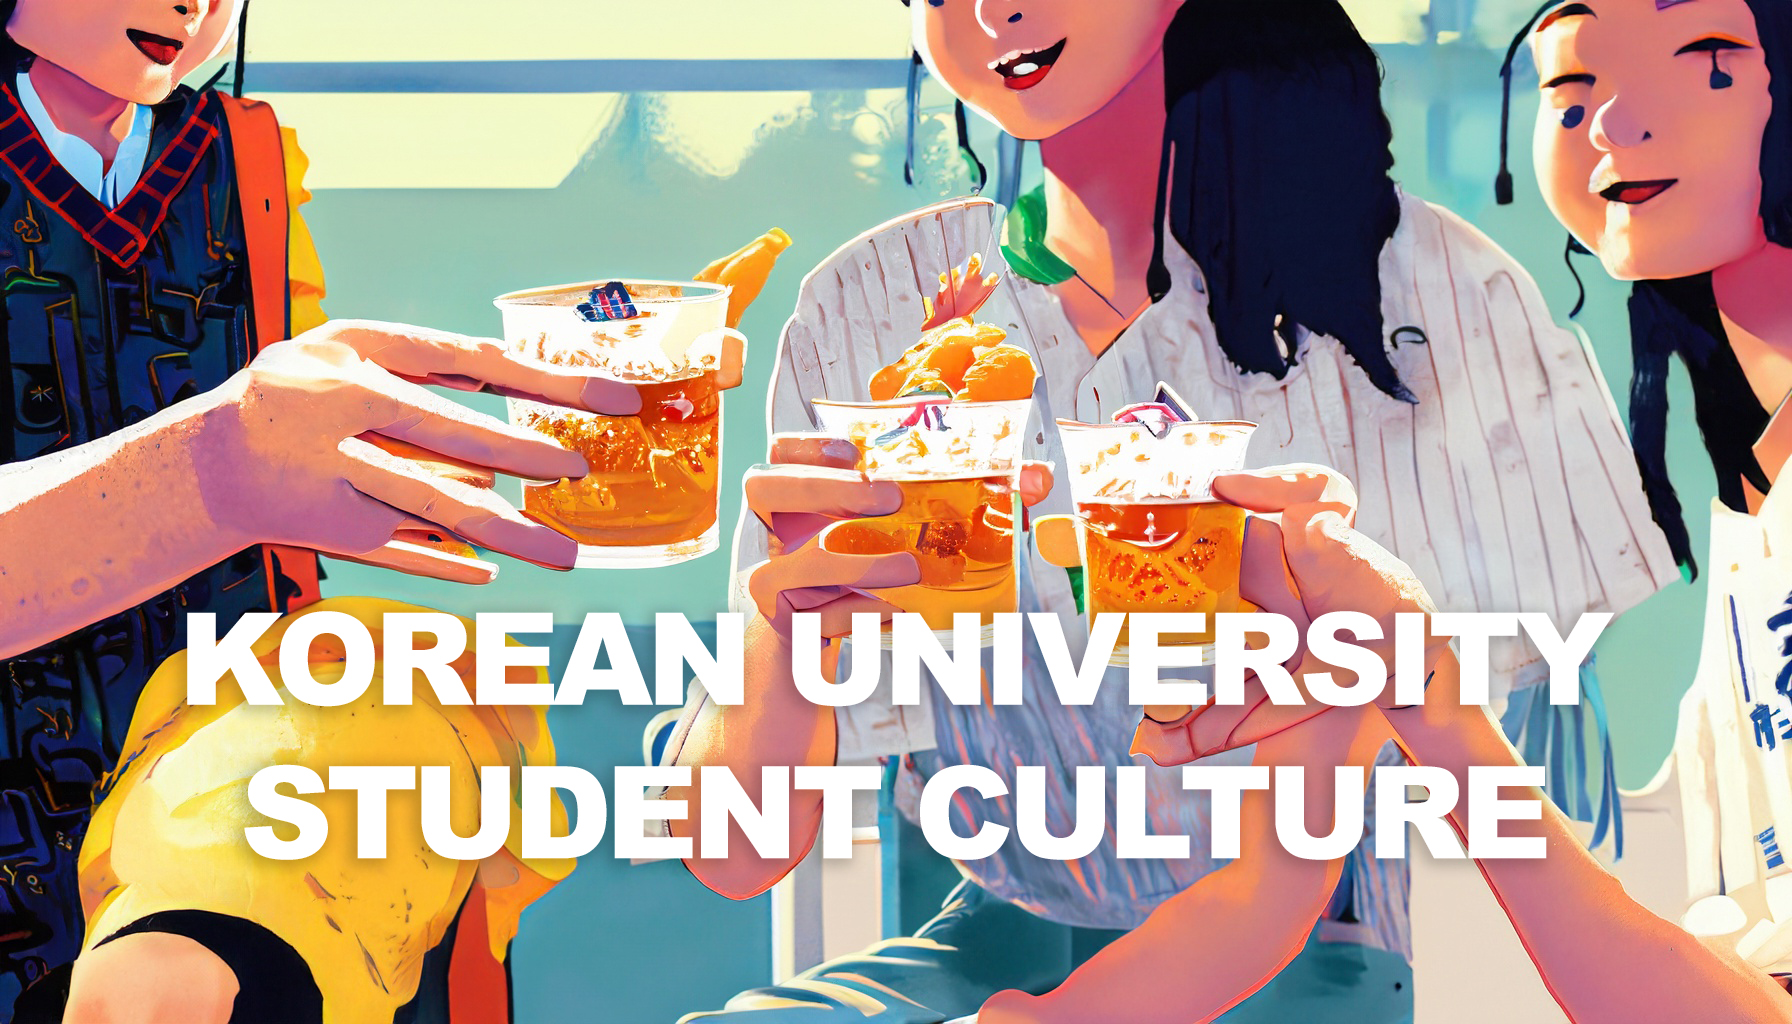 Korean University Student Culture.jpg